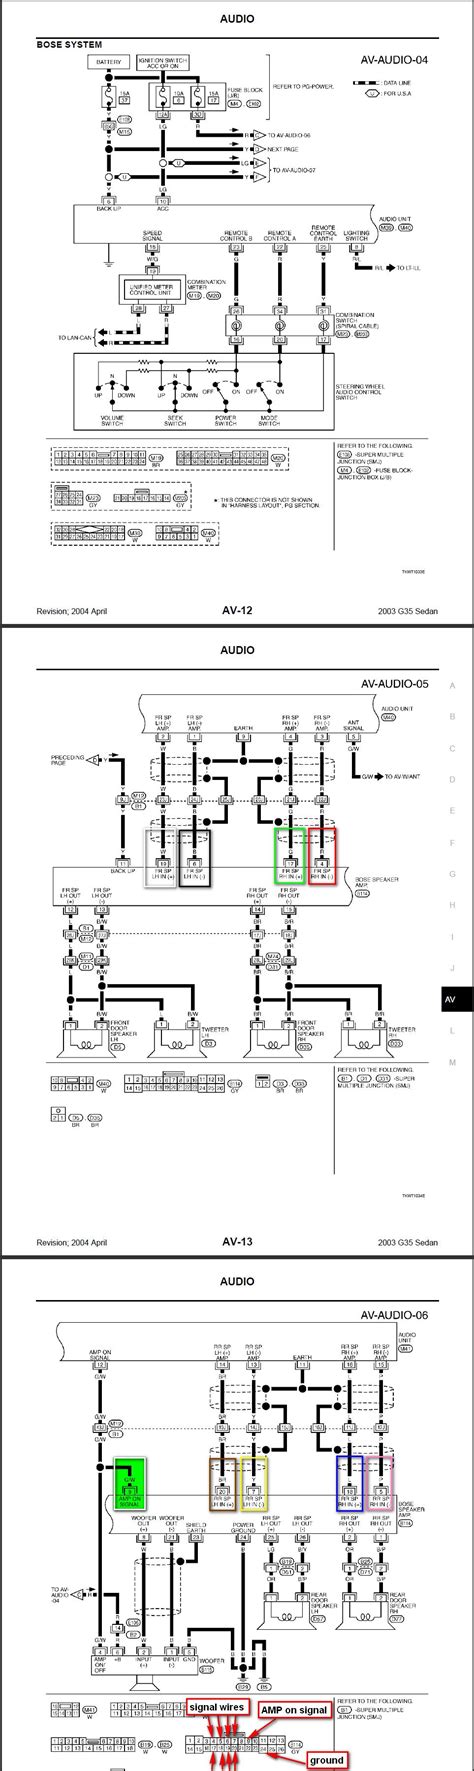 infinity  bose stereo qa  amp wiring diagram location